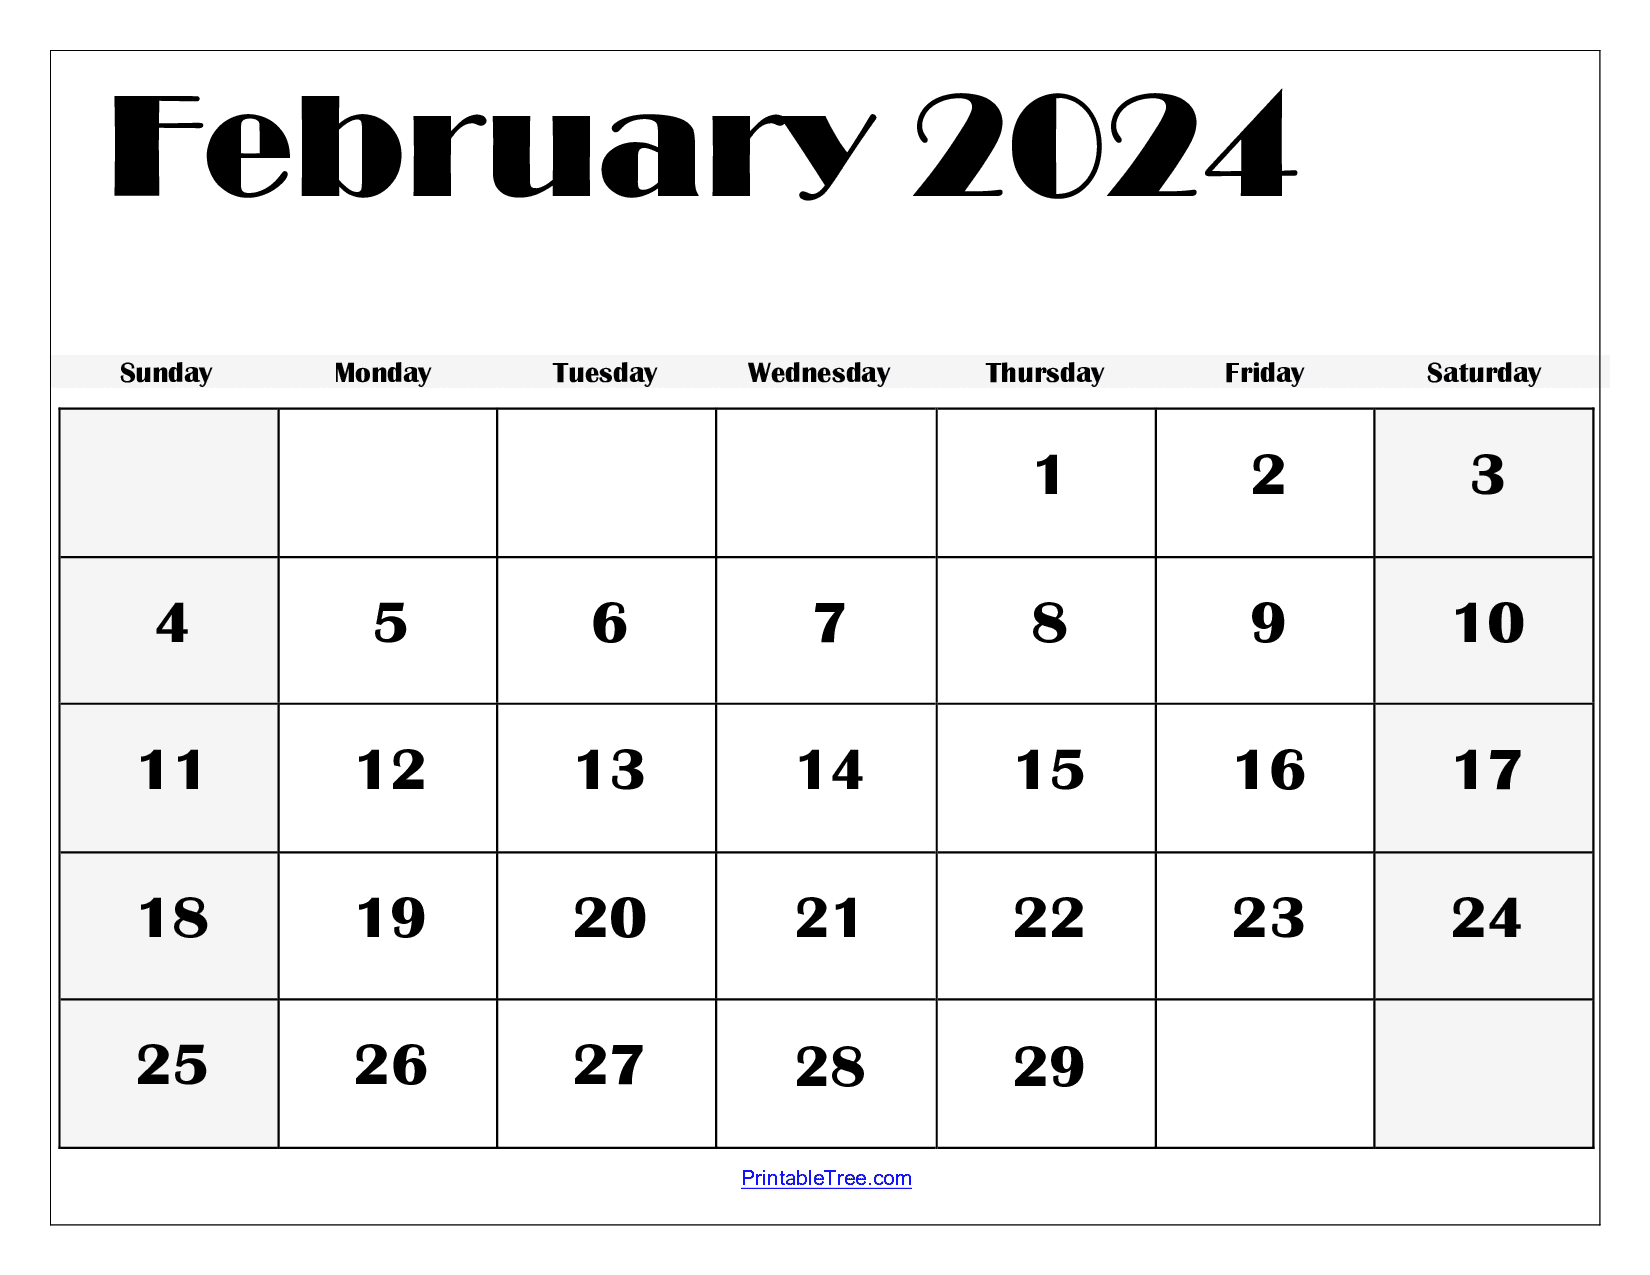 February 2024 Calendar Printable Pdf Template With Holidays for 2024 February Calendar Free Printable